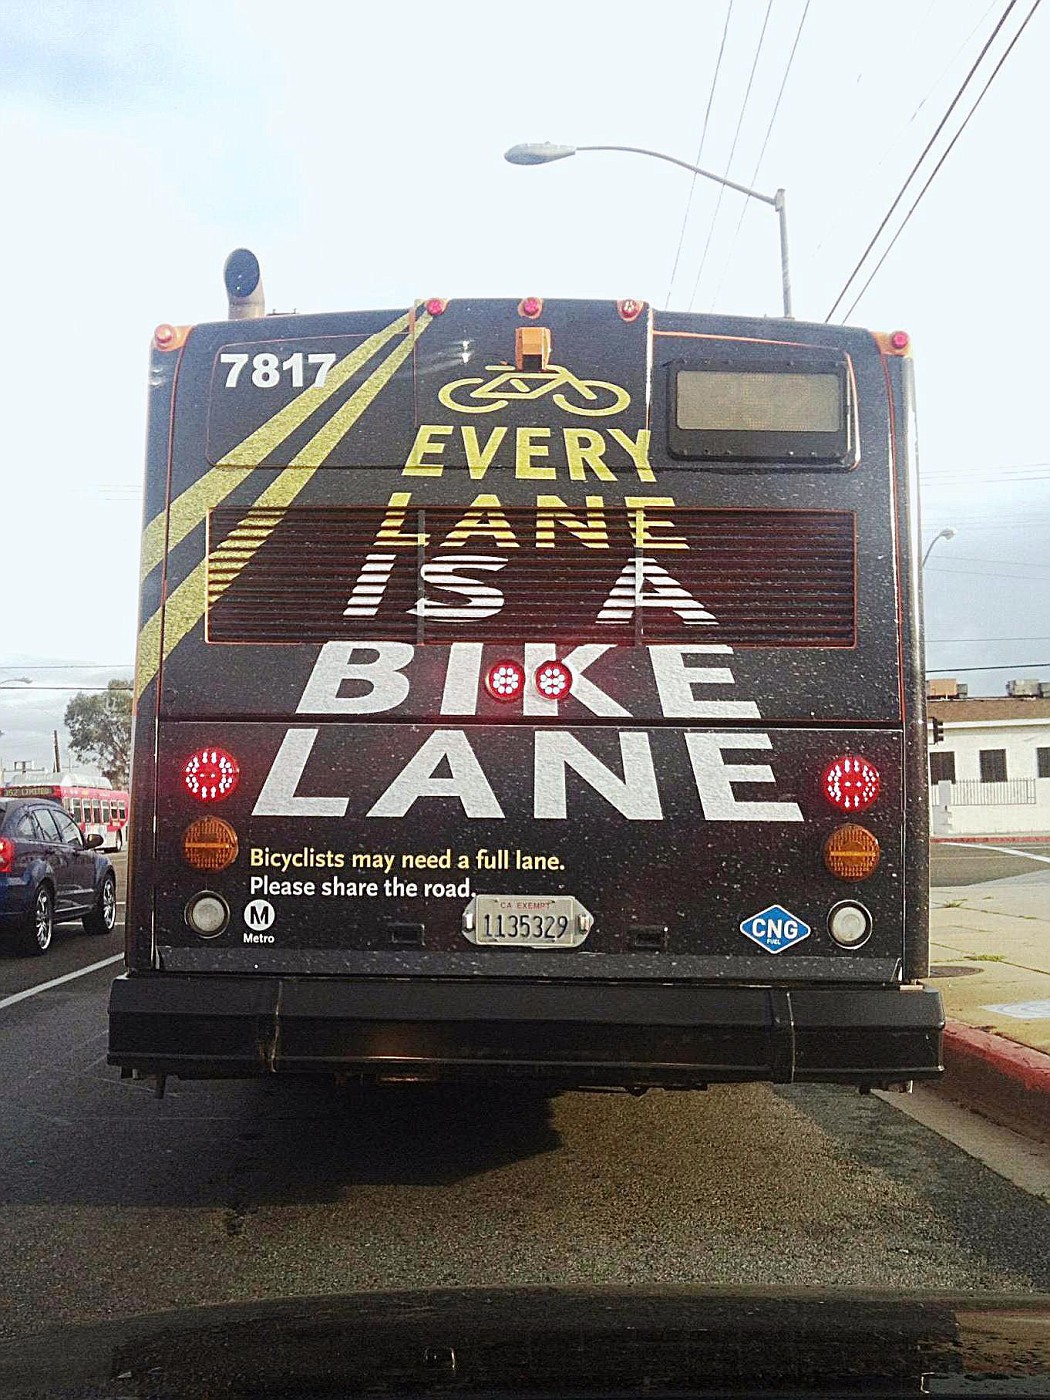 Every lane is a bike lane!